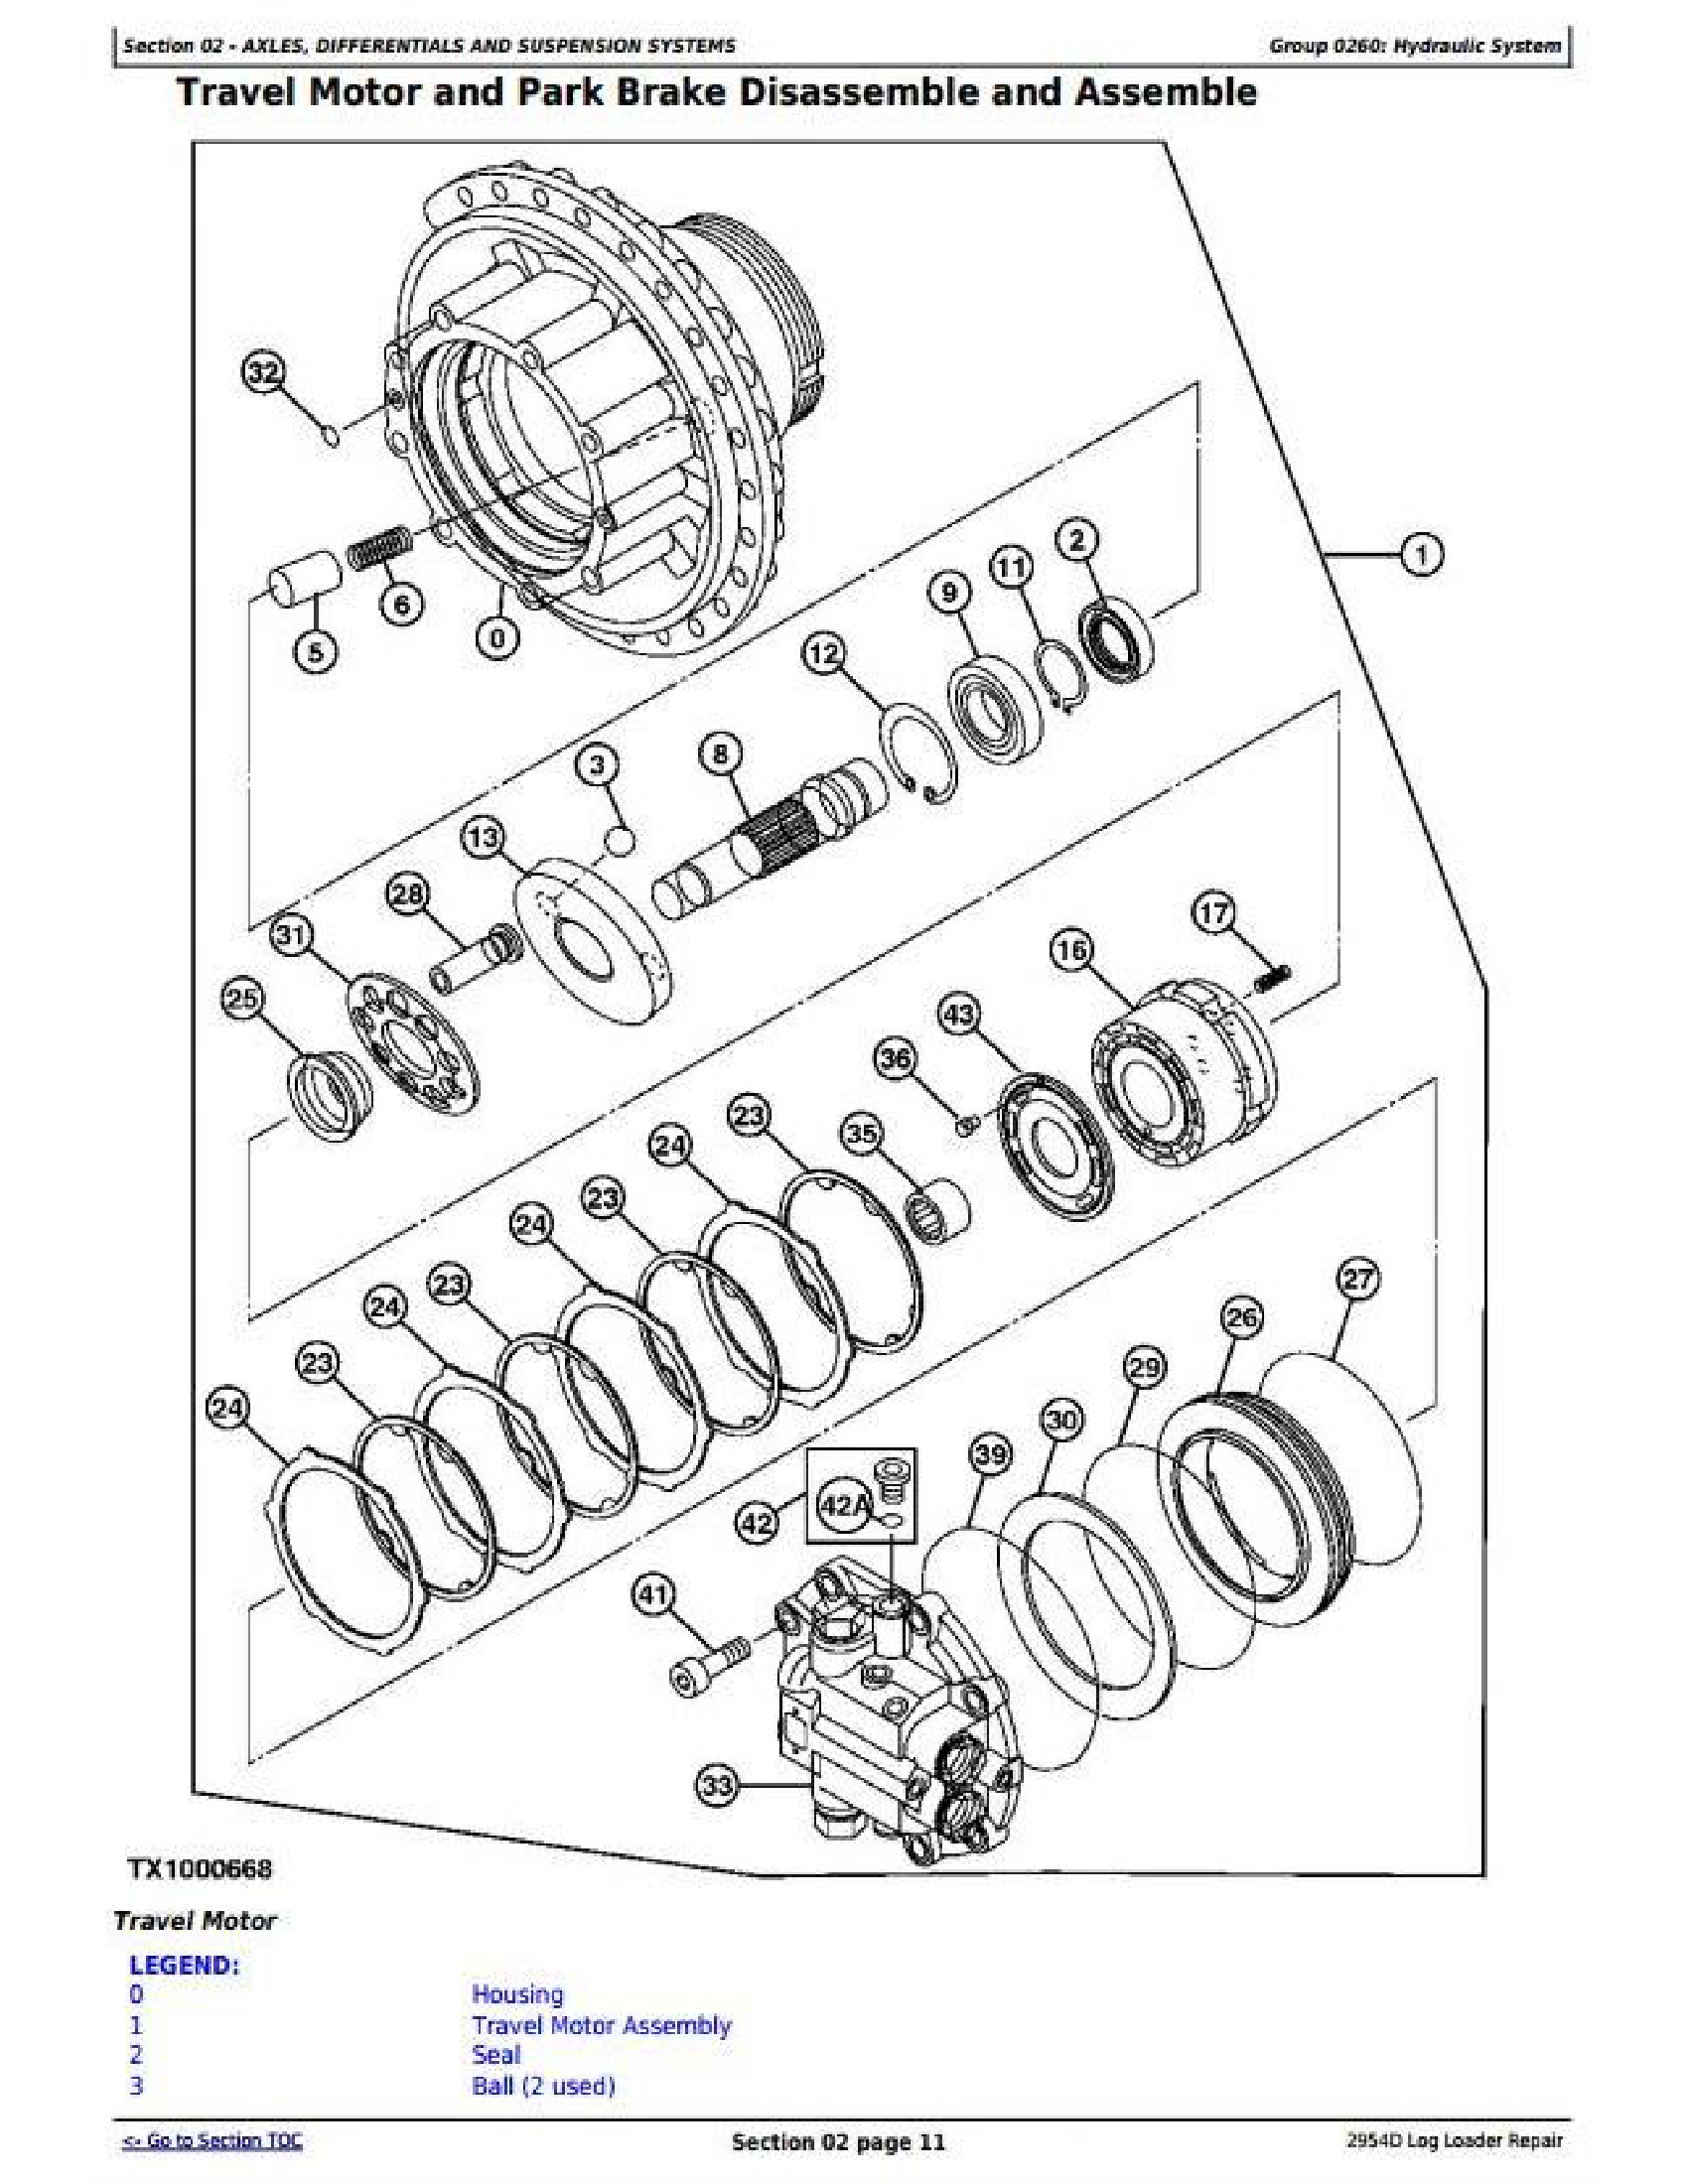 John Deere 948L manual pdf